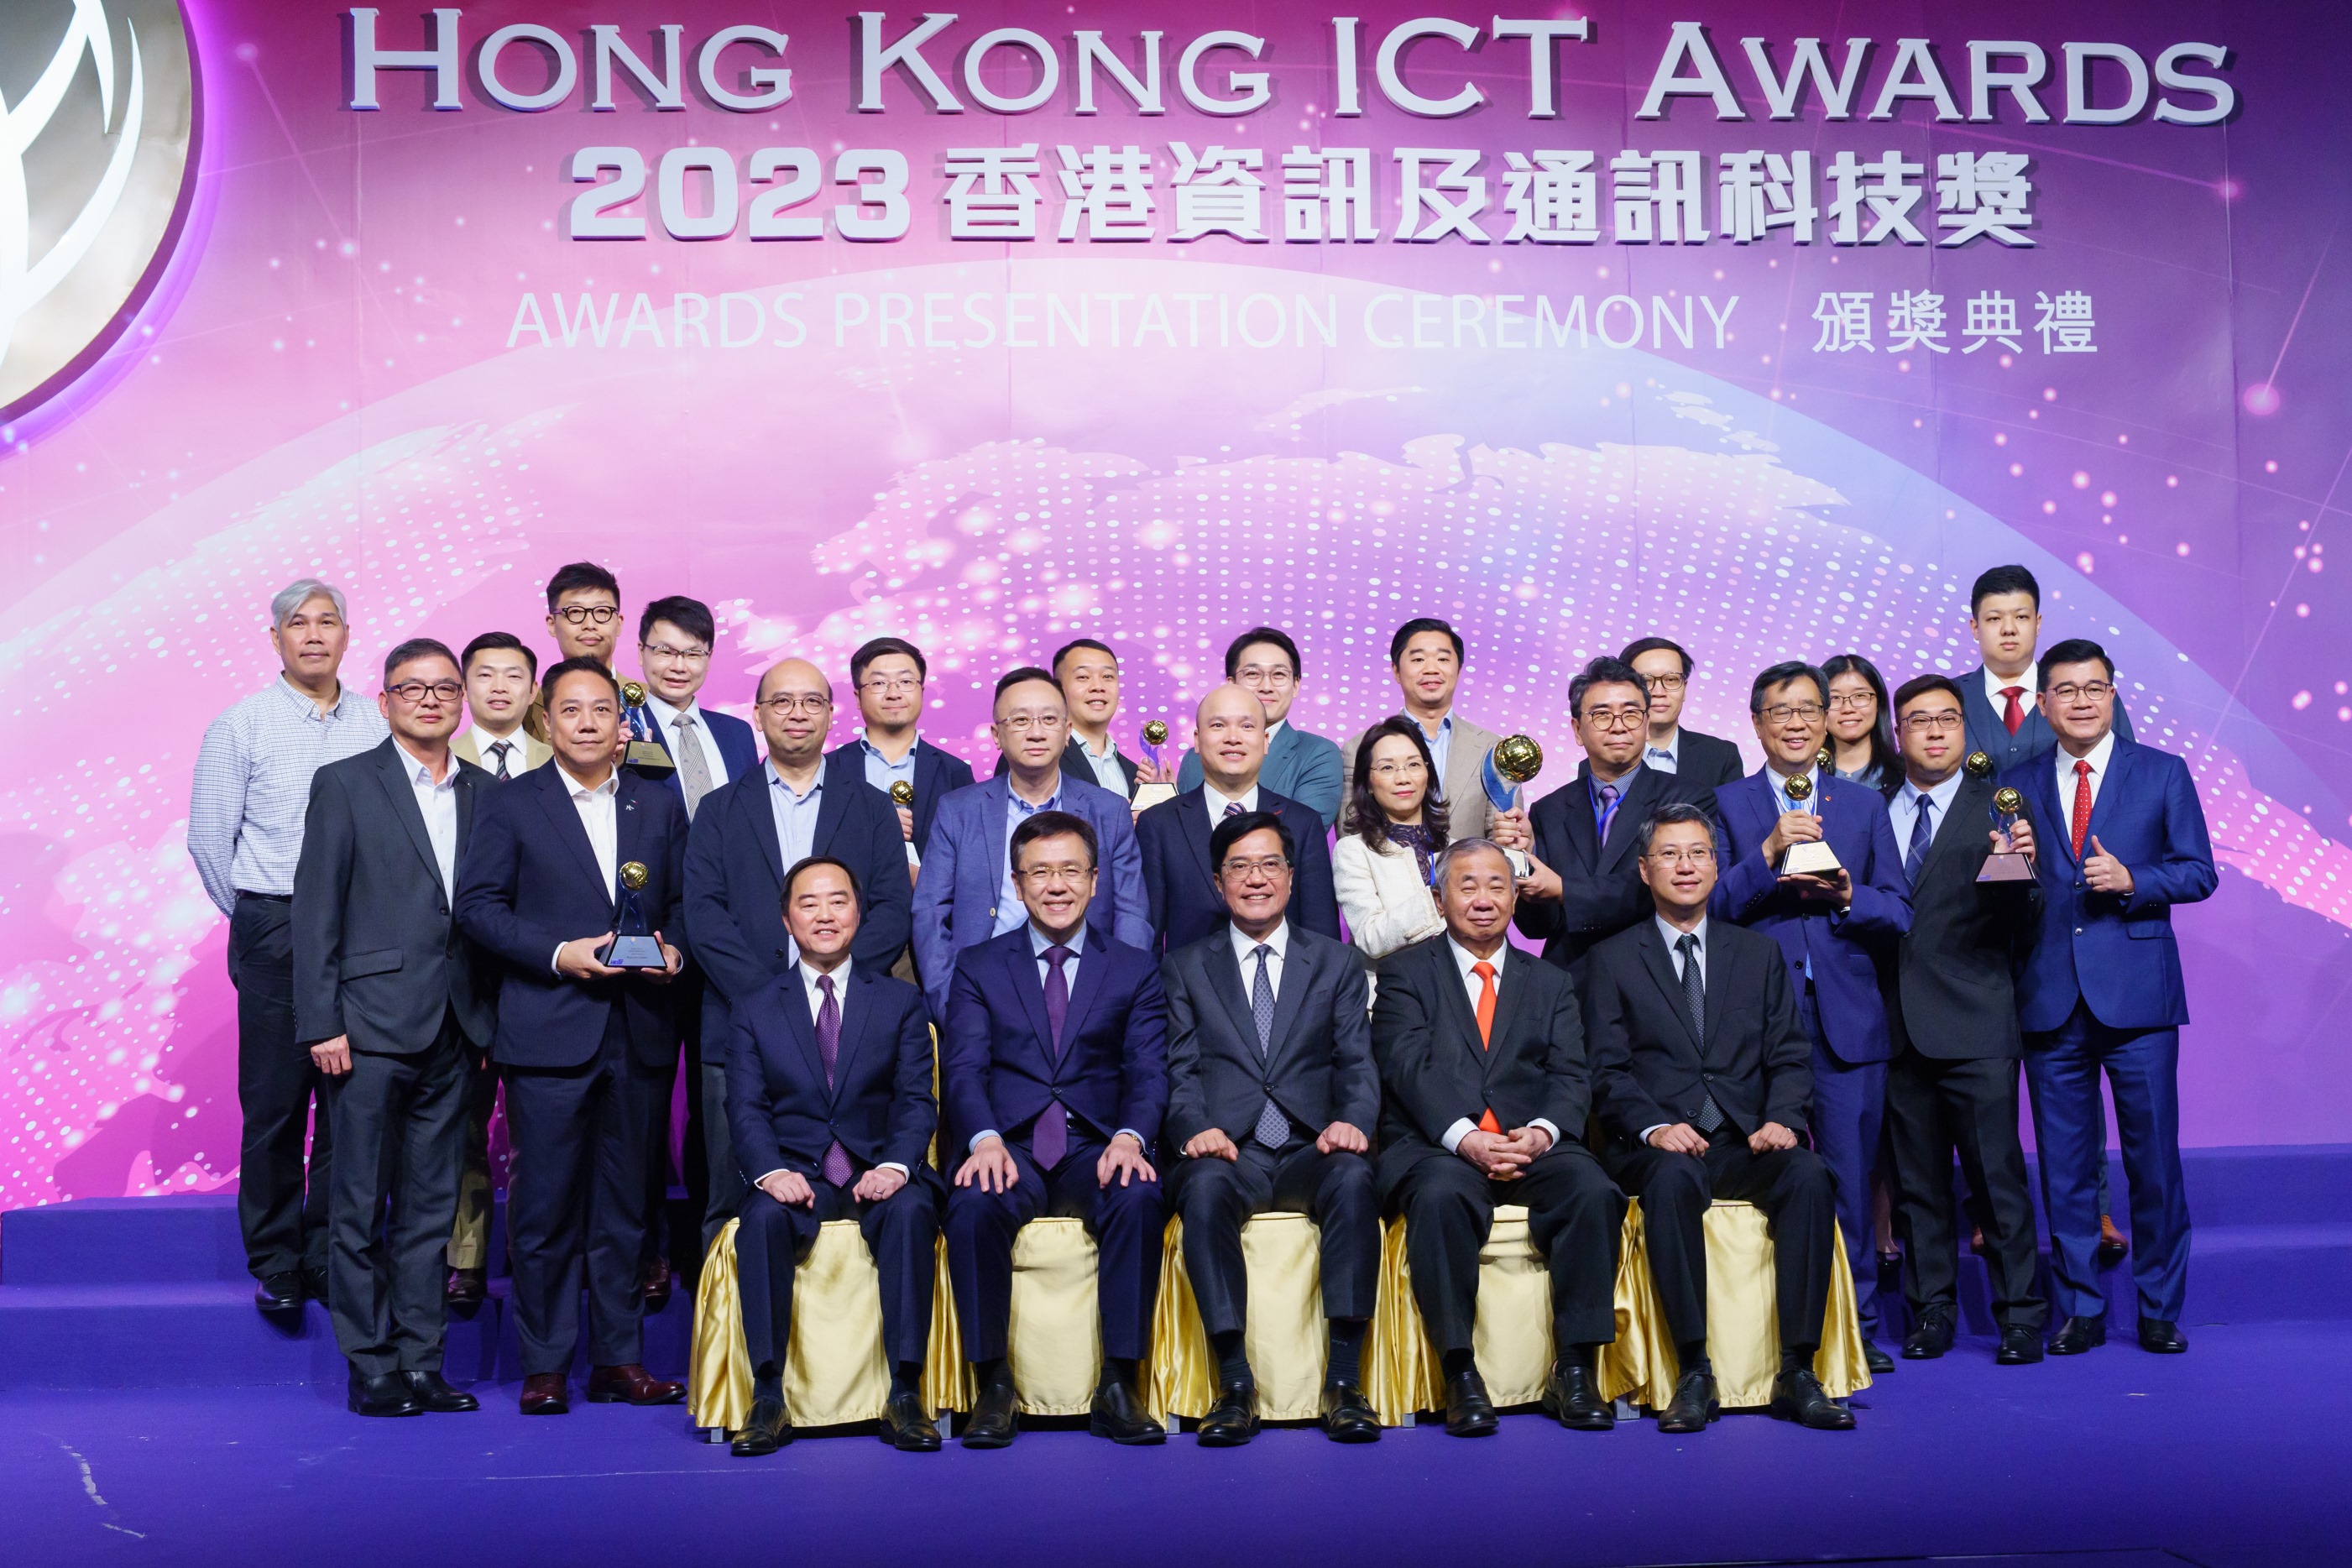 Hong Kong ICT Awards 2023 Smart Living Award Winners Group Photo